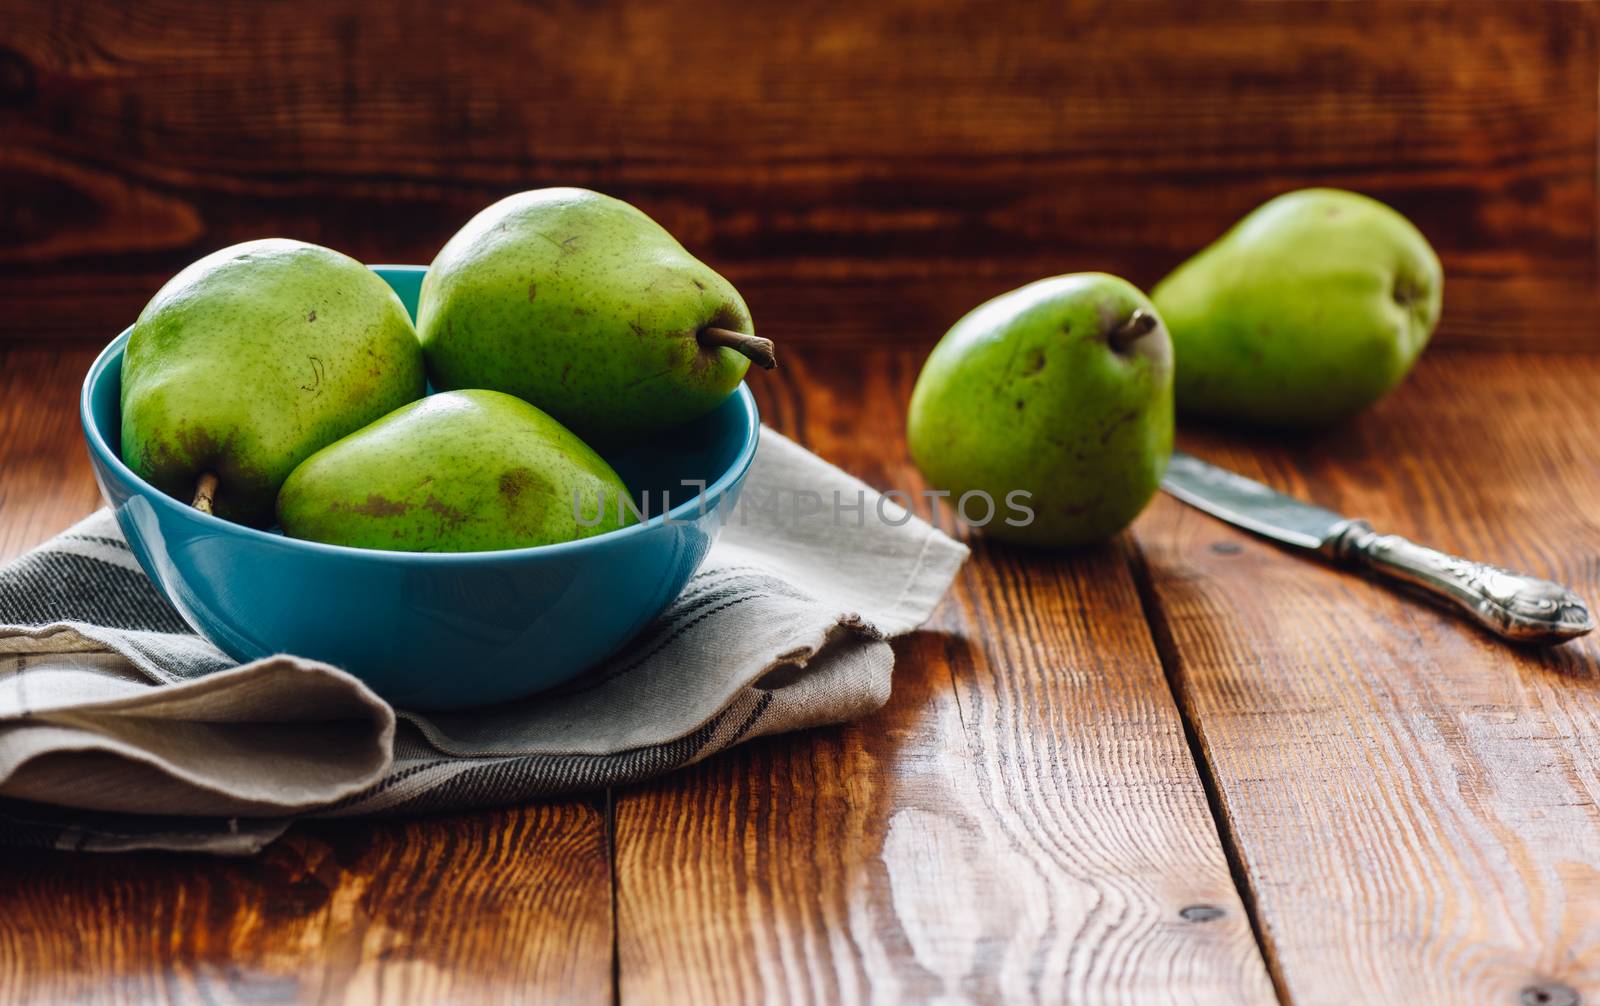 Green Pears in Blue Bowl by Seva_blsv